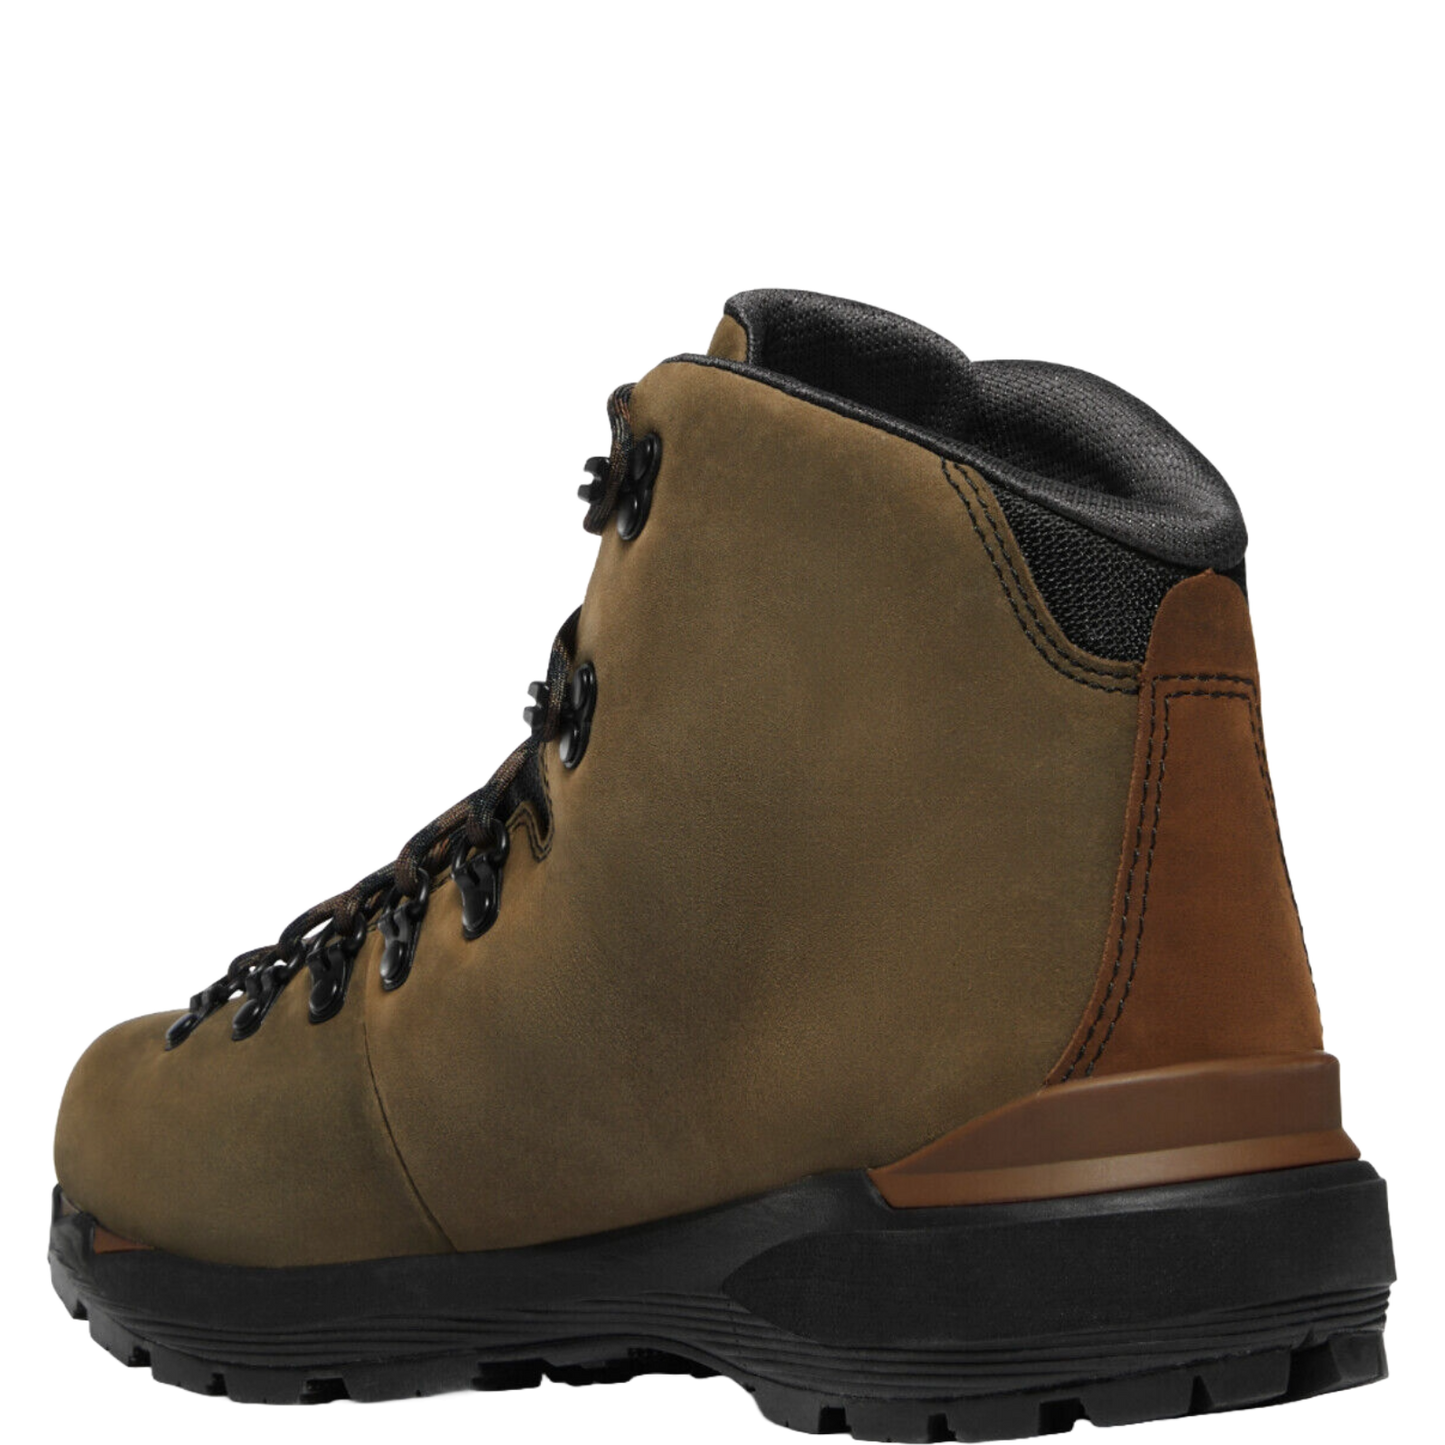 Danner Men's Mountain 600 Evo Topsoil Brown & Black Hiking Boots 62712